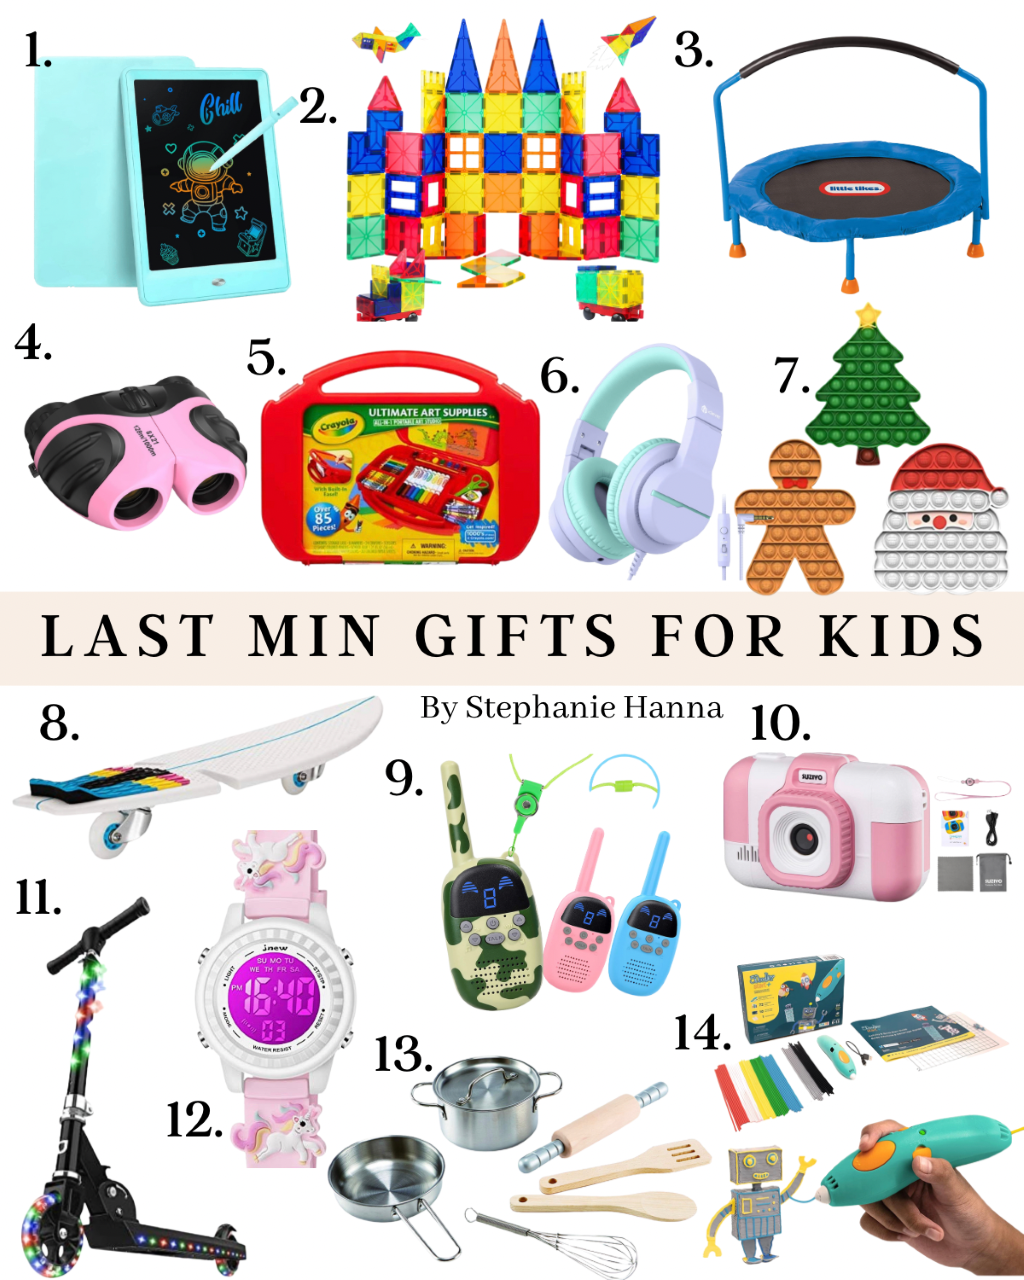 Last Minute Gifts For Kids - Stephanie Hanna Blog